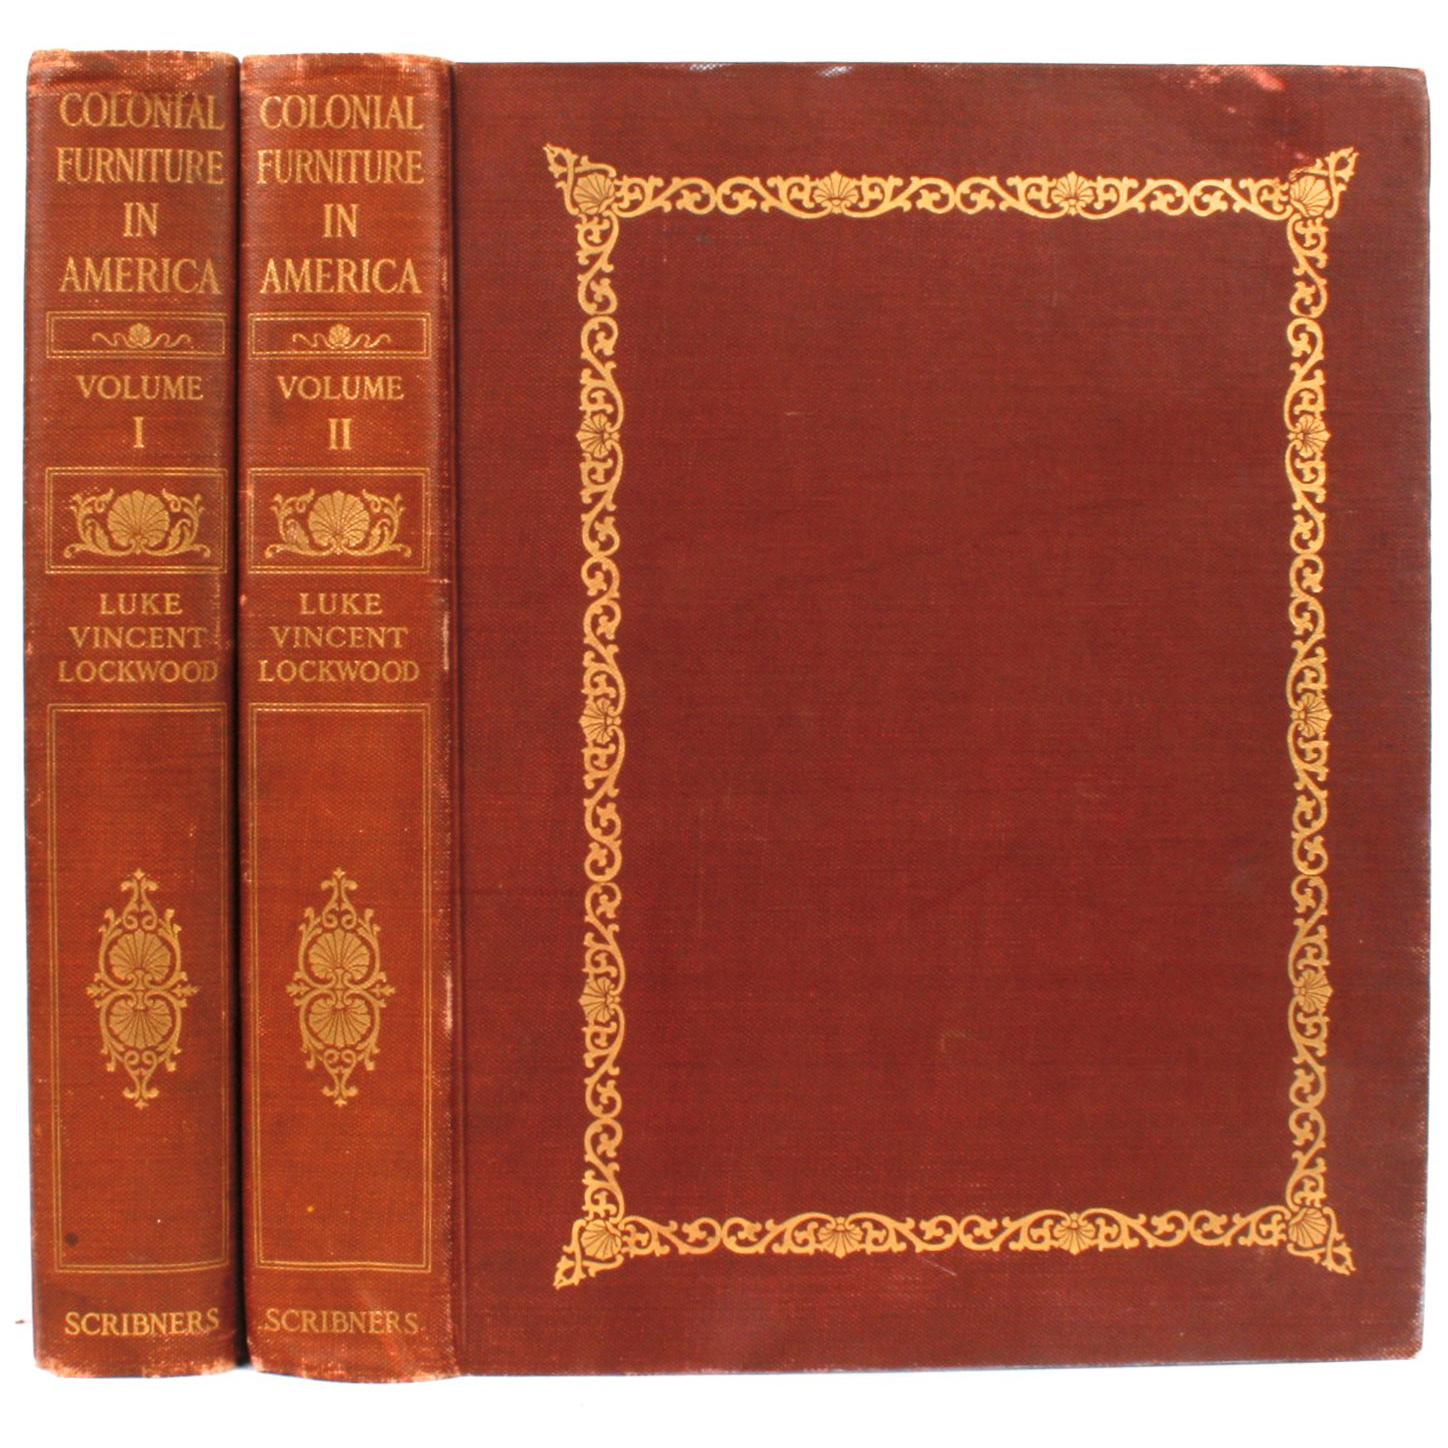 Colonial Furniture in America by Luke Vincent Lockwood, Volumes I & II